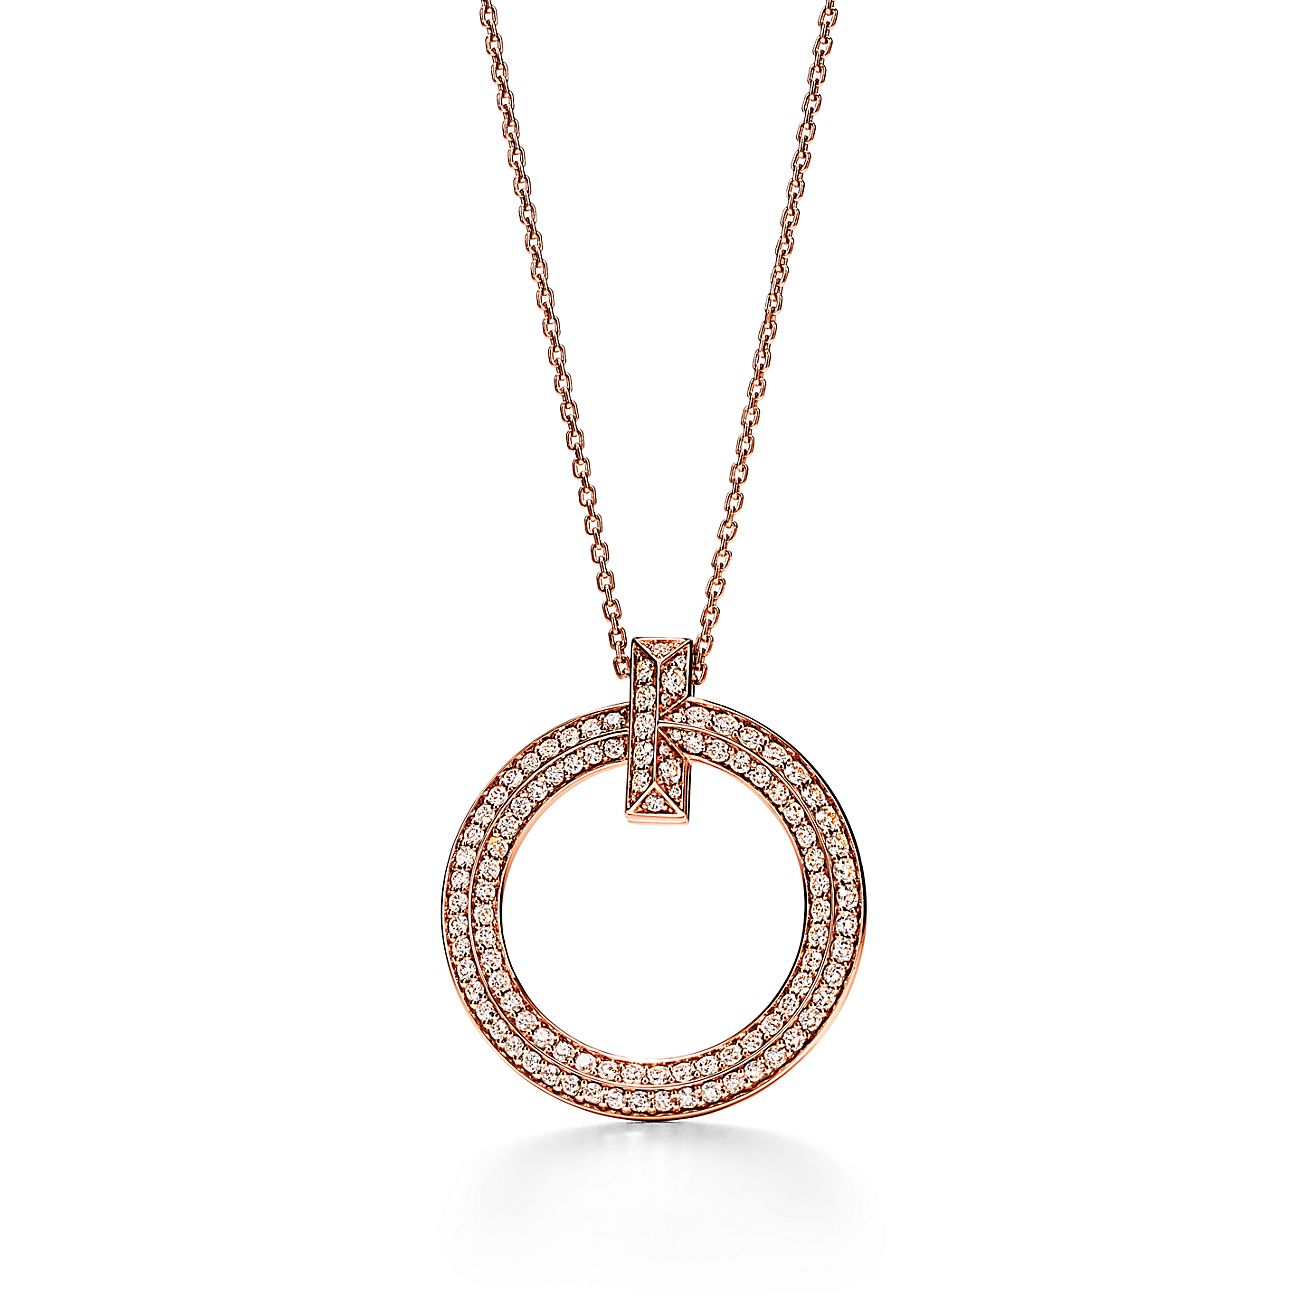 Buy Crunchy Fashion Elegant Gold-plated Circle Pendant Necklace Set Online